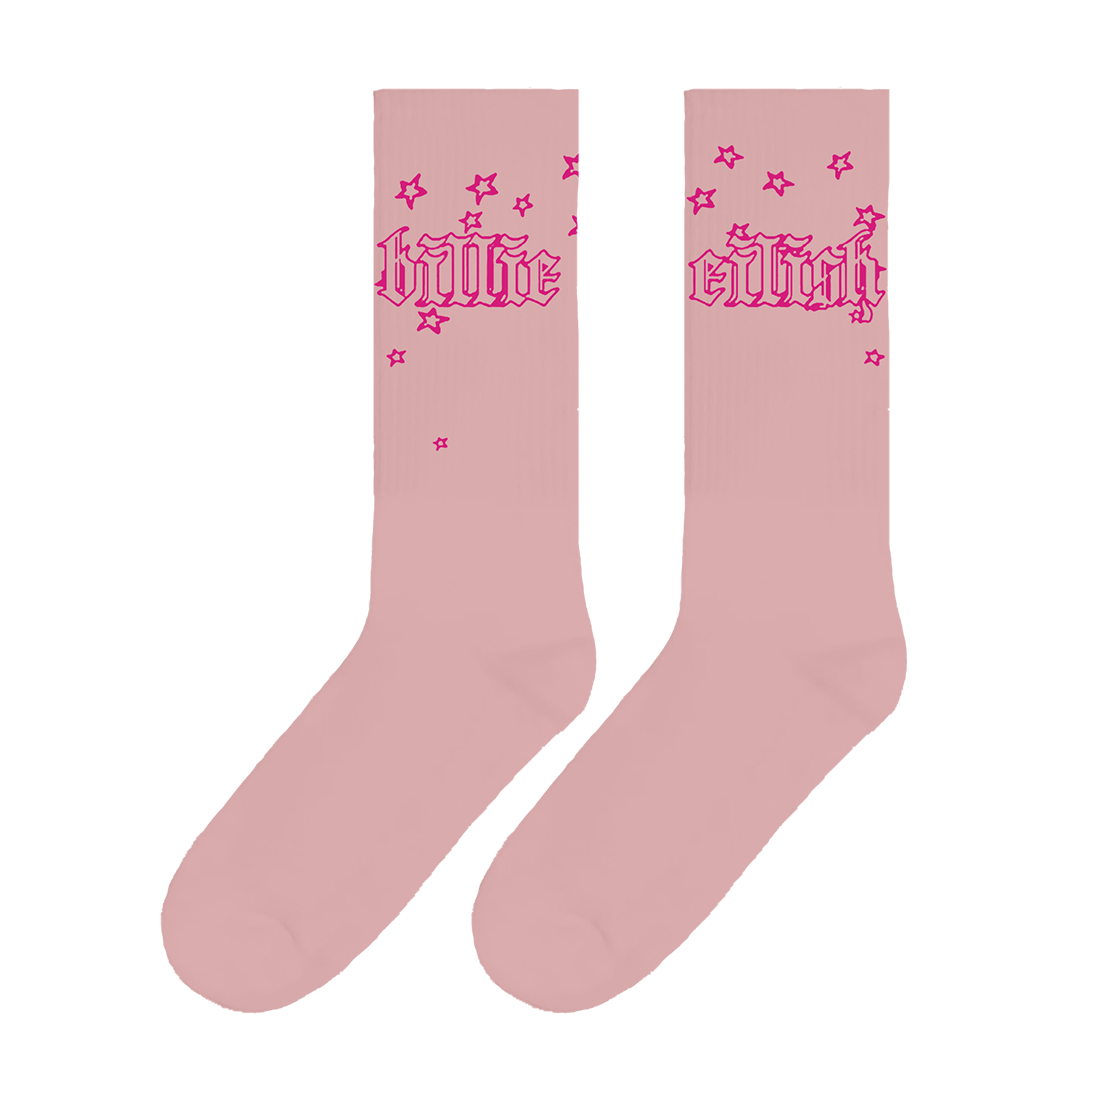 Beloved Pink Socks - Billie Eilish